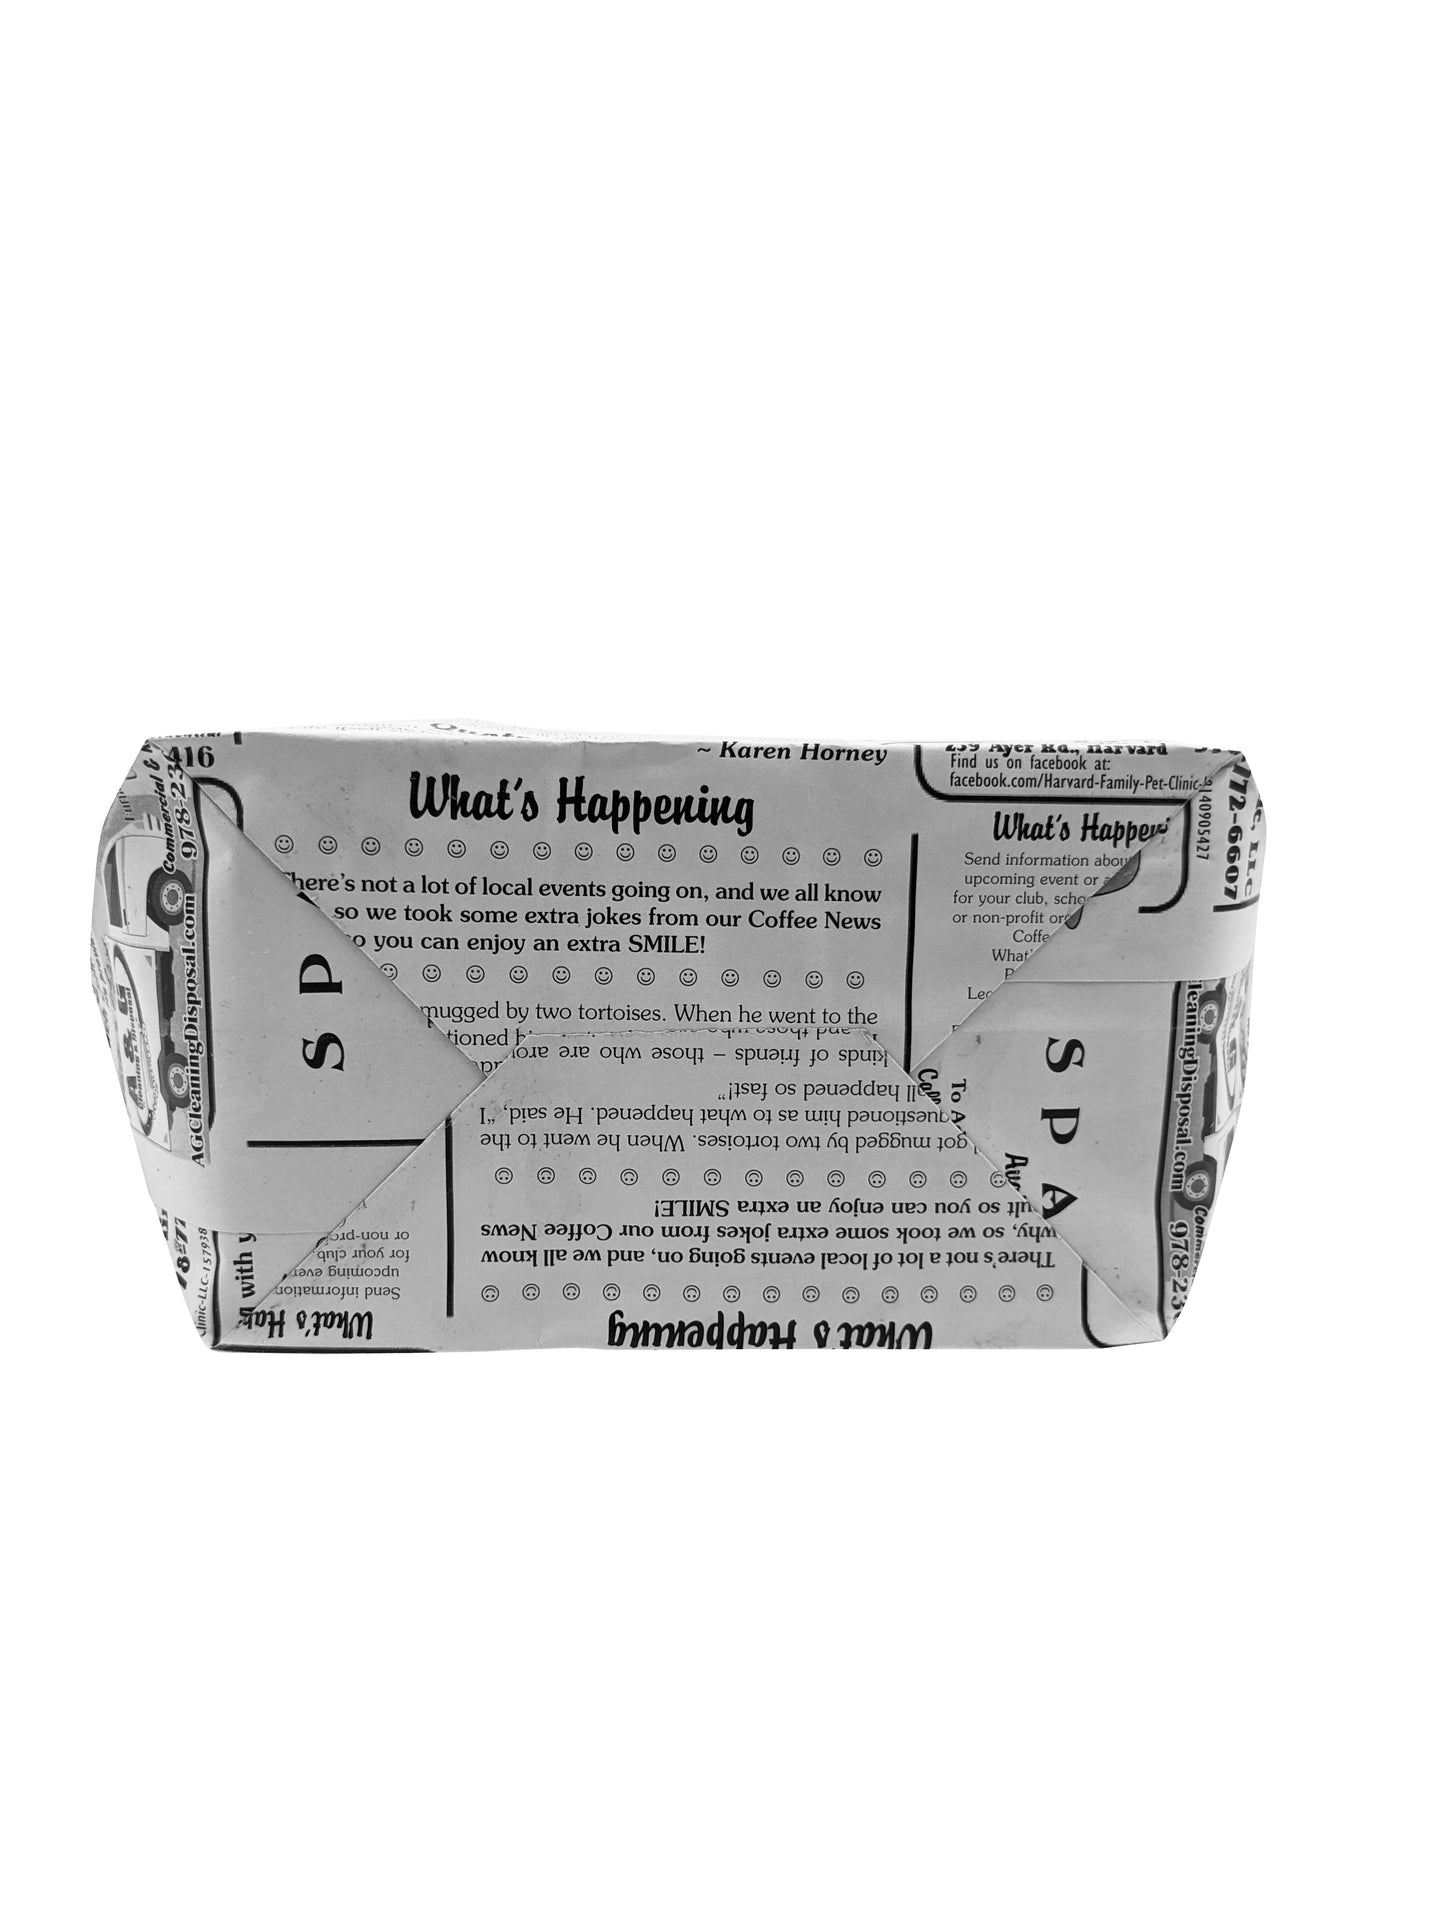 White Coffee News paper bags - Medium size - Short Version